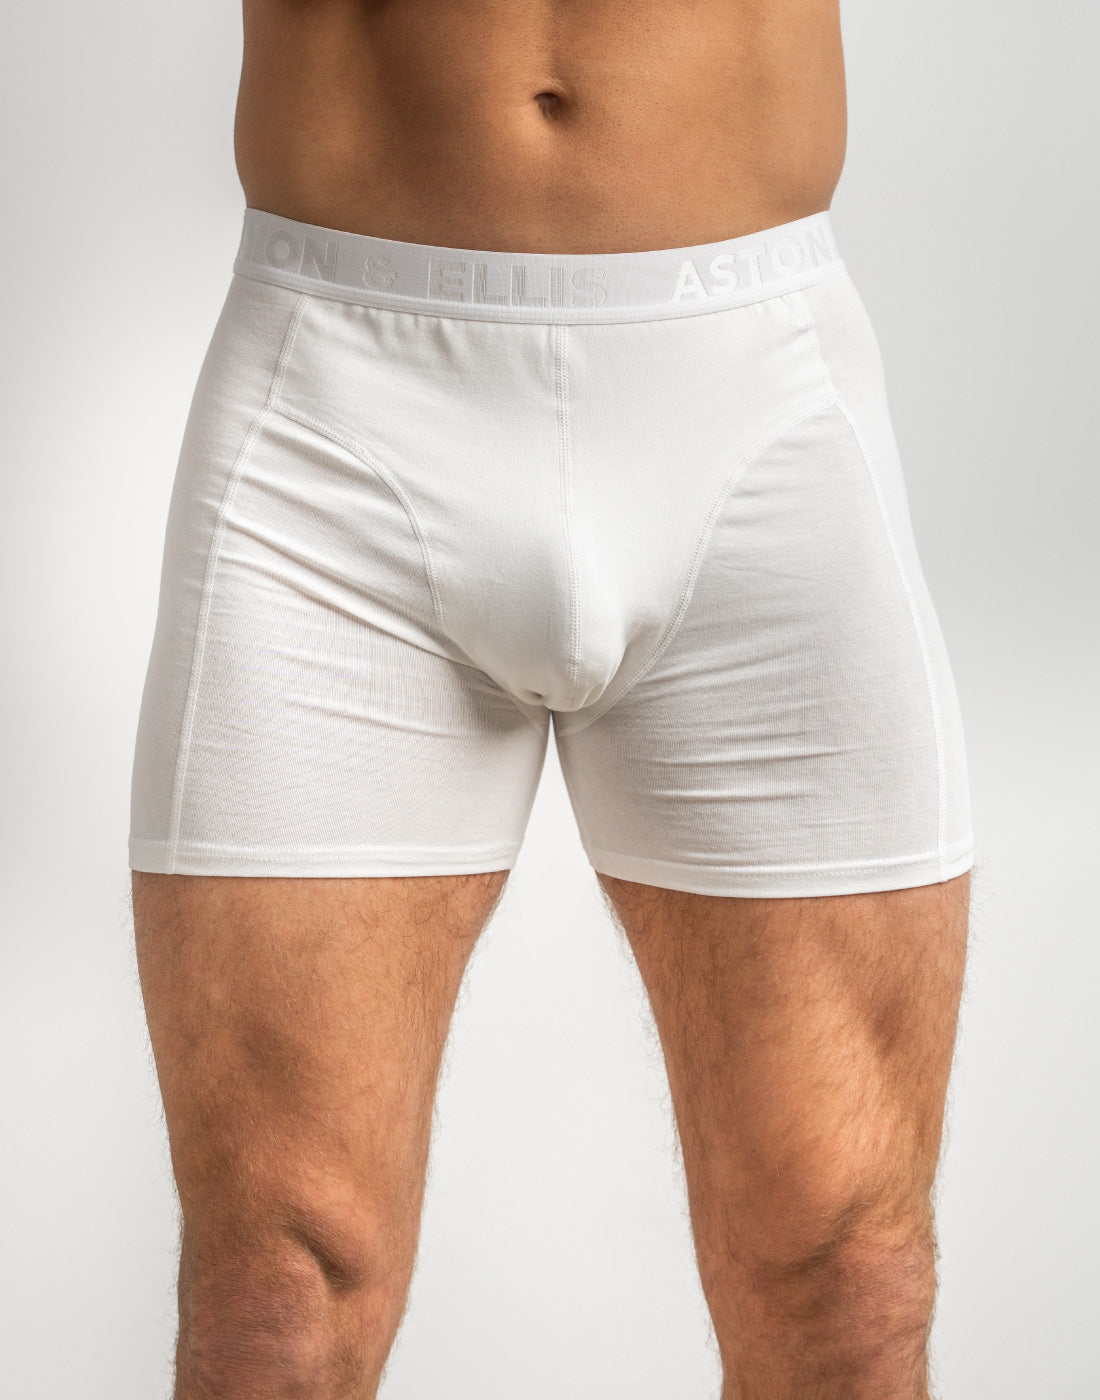 Aston-ellis-back-white-boxershorts